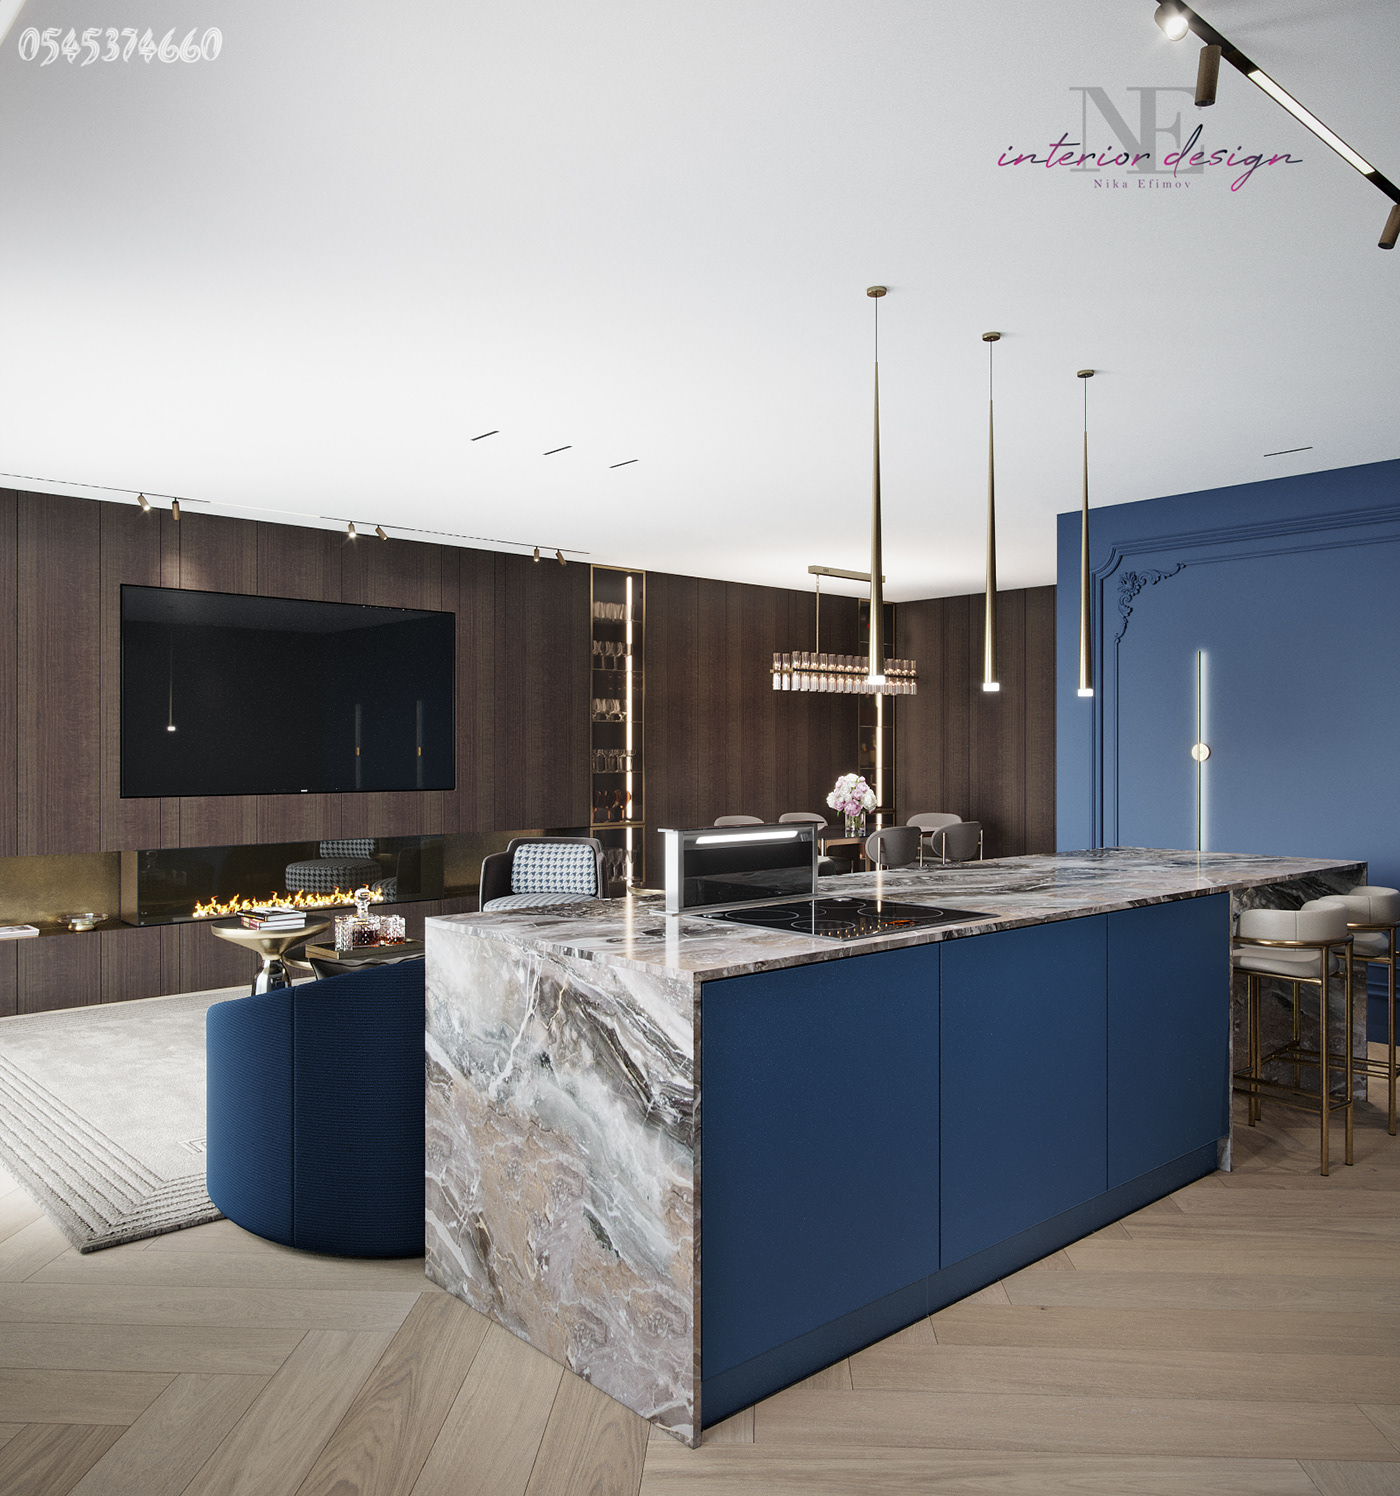 #living room #interiordesign #fireplace #trends2021 #kitchendesign #kitchen